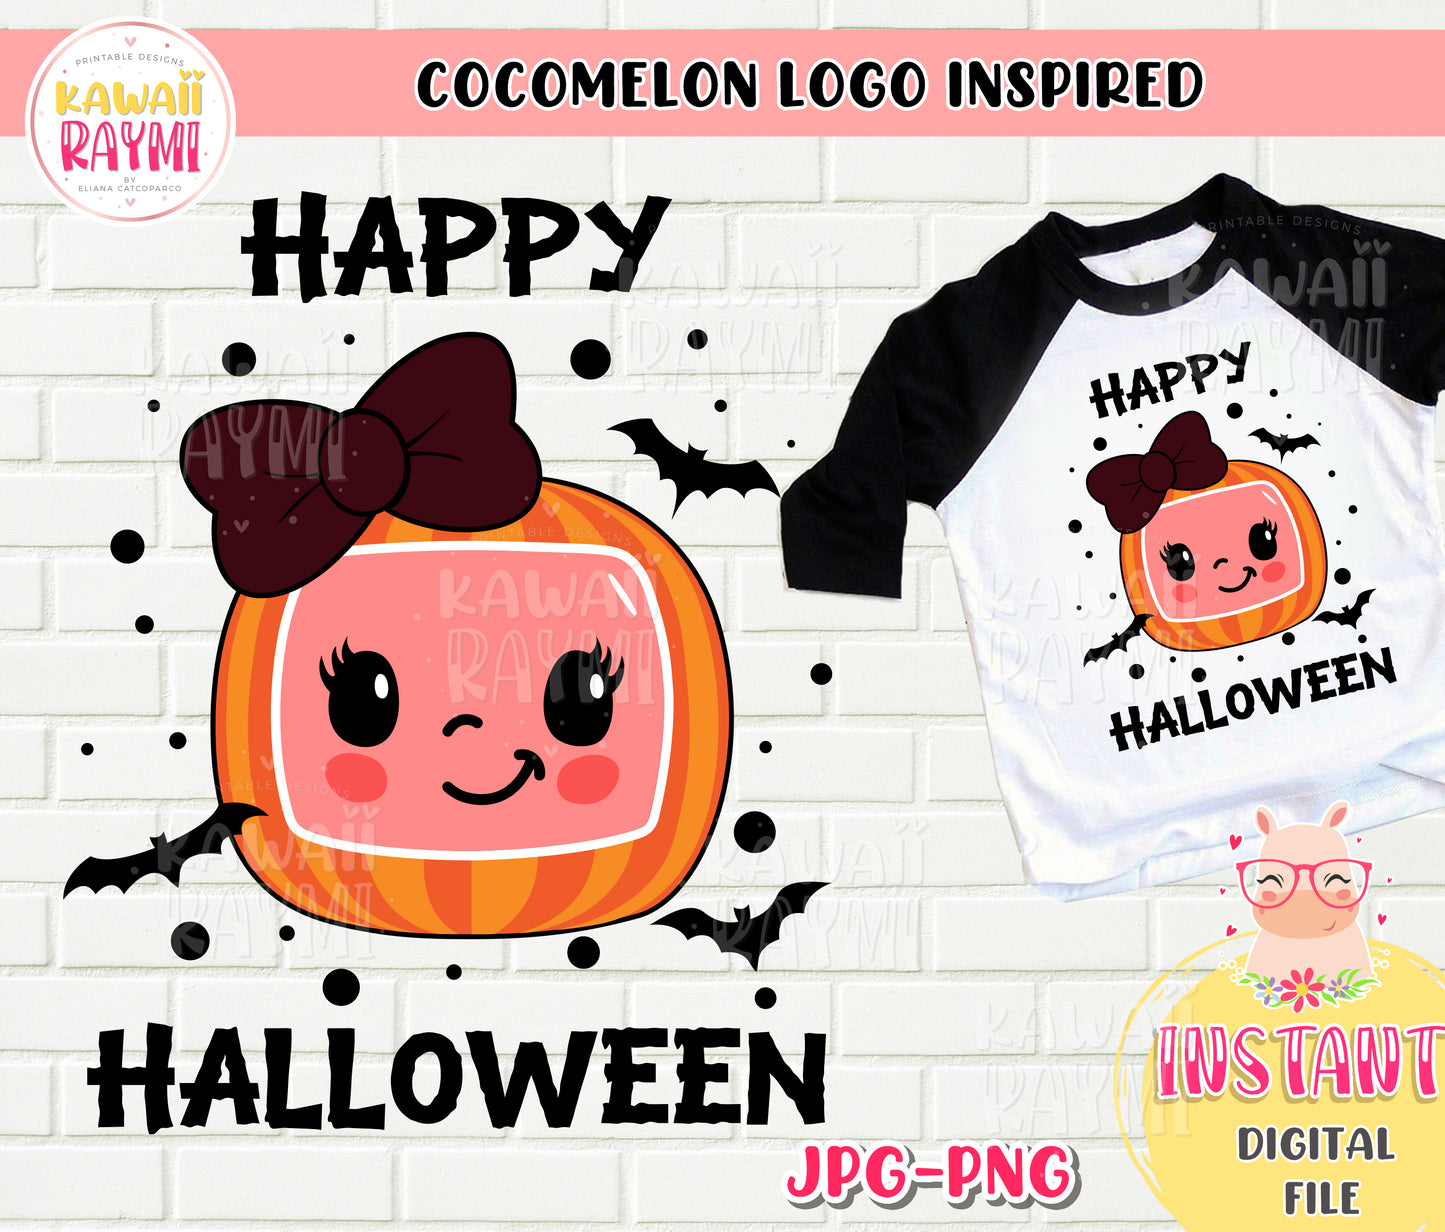 Cocomelon Happy Halloween JPG -PNG- DIGITAL FILE